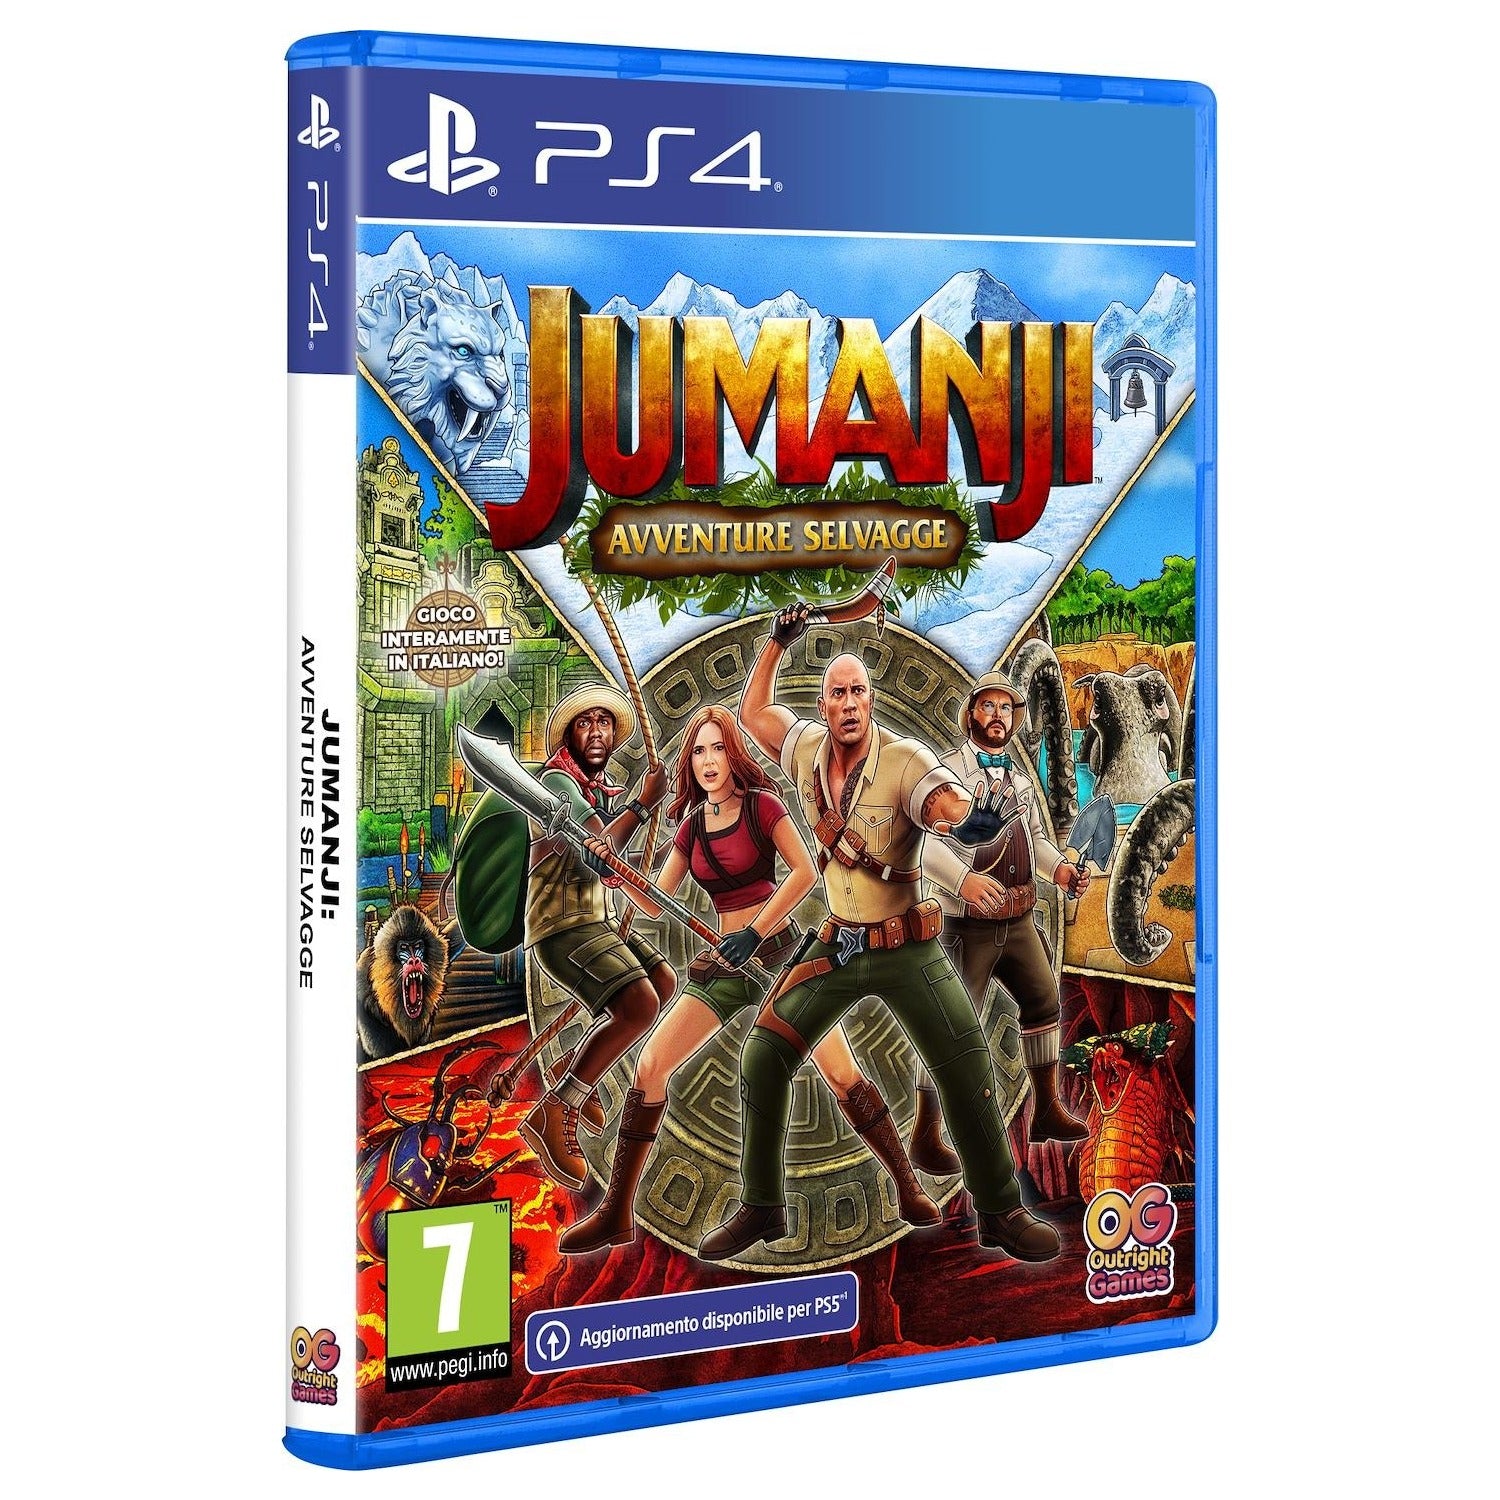 PS4 Jumanji Avventure Selvagge - Disponibile in 2/3 giorni lavorativi Namco Bandai